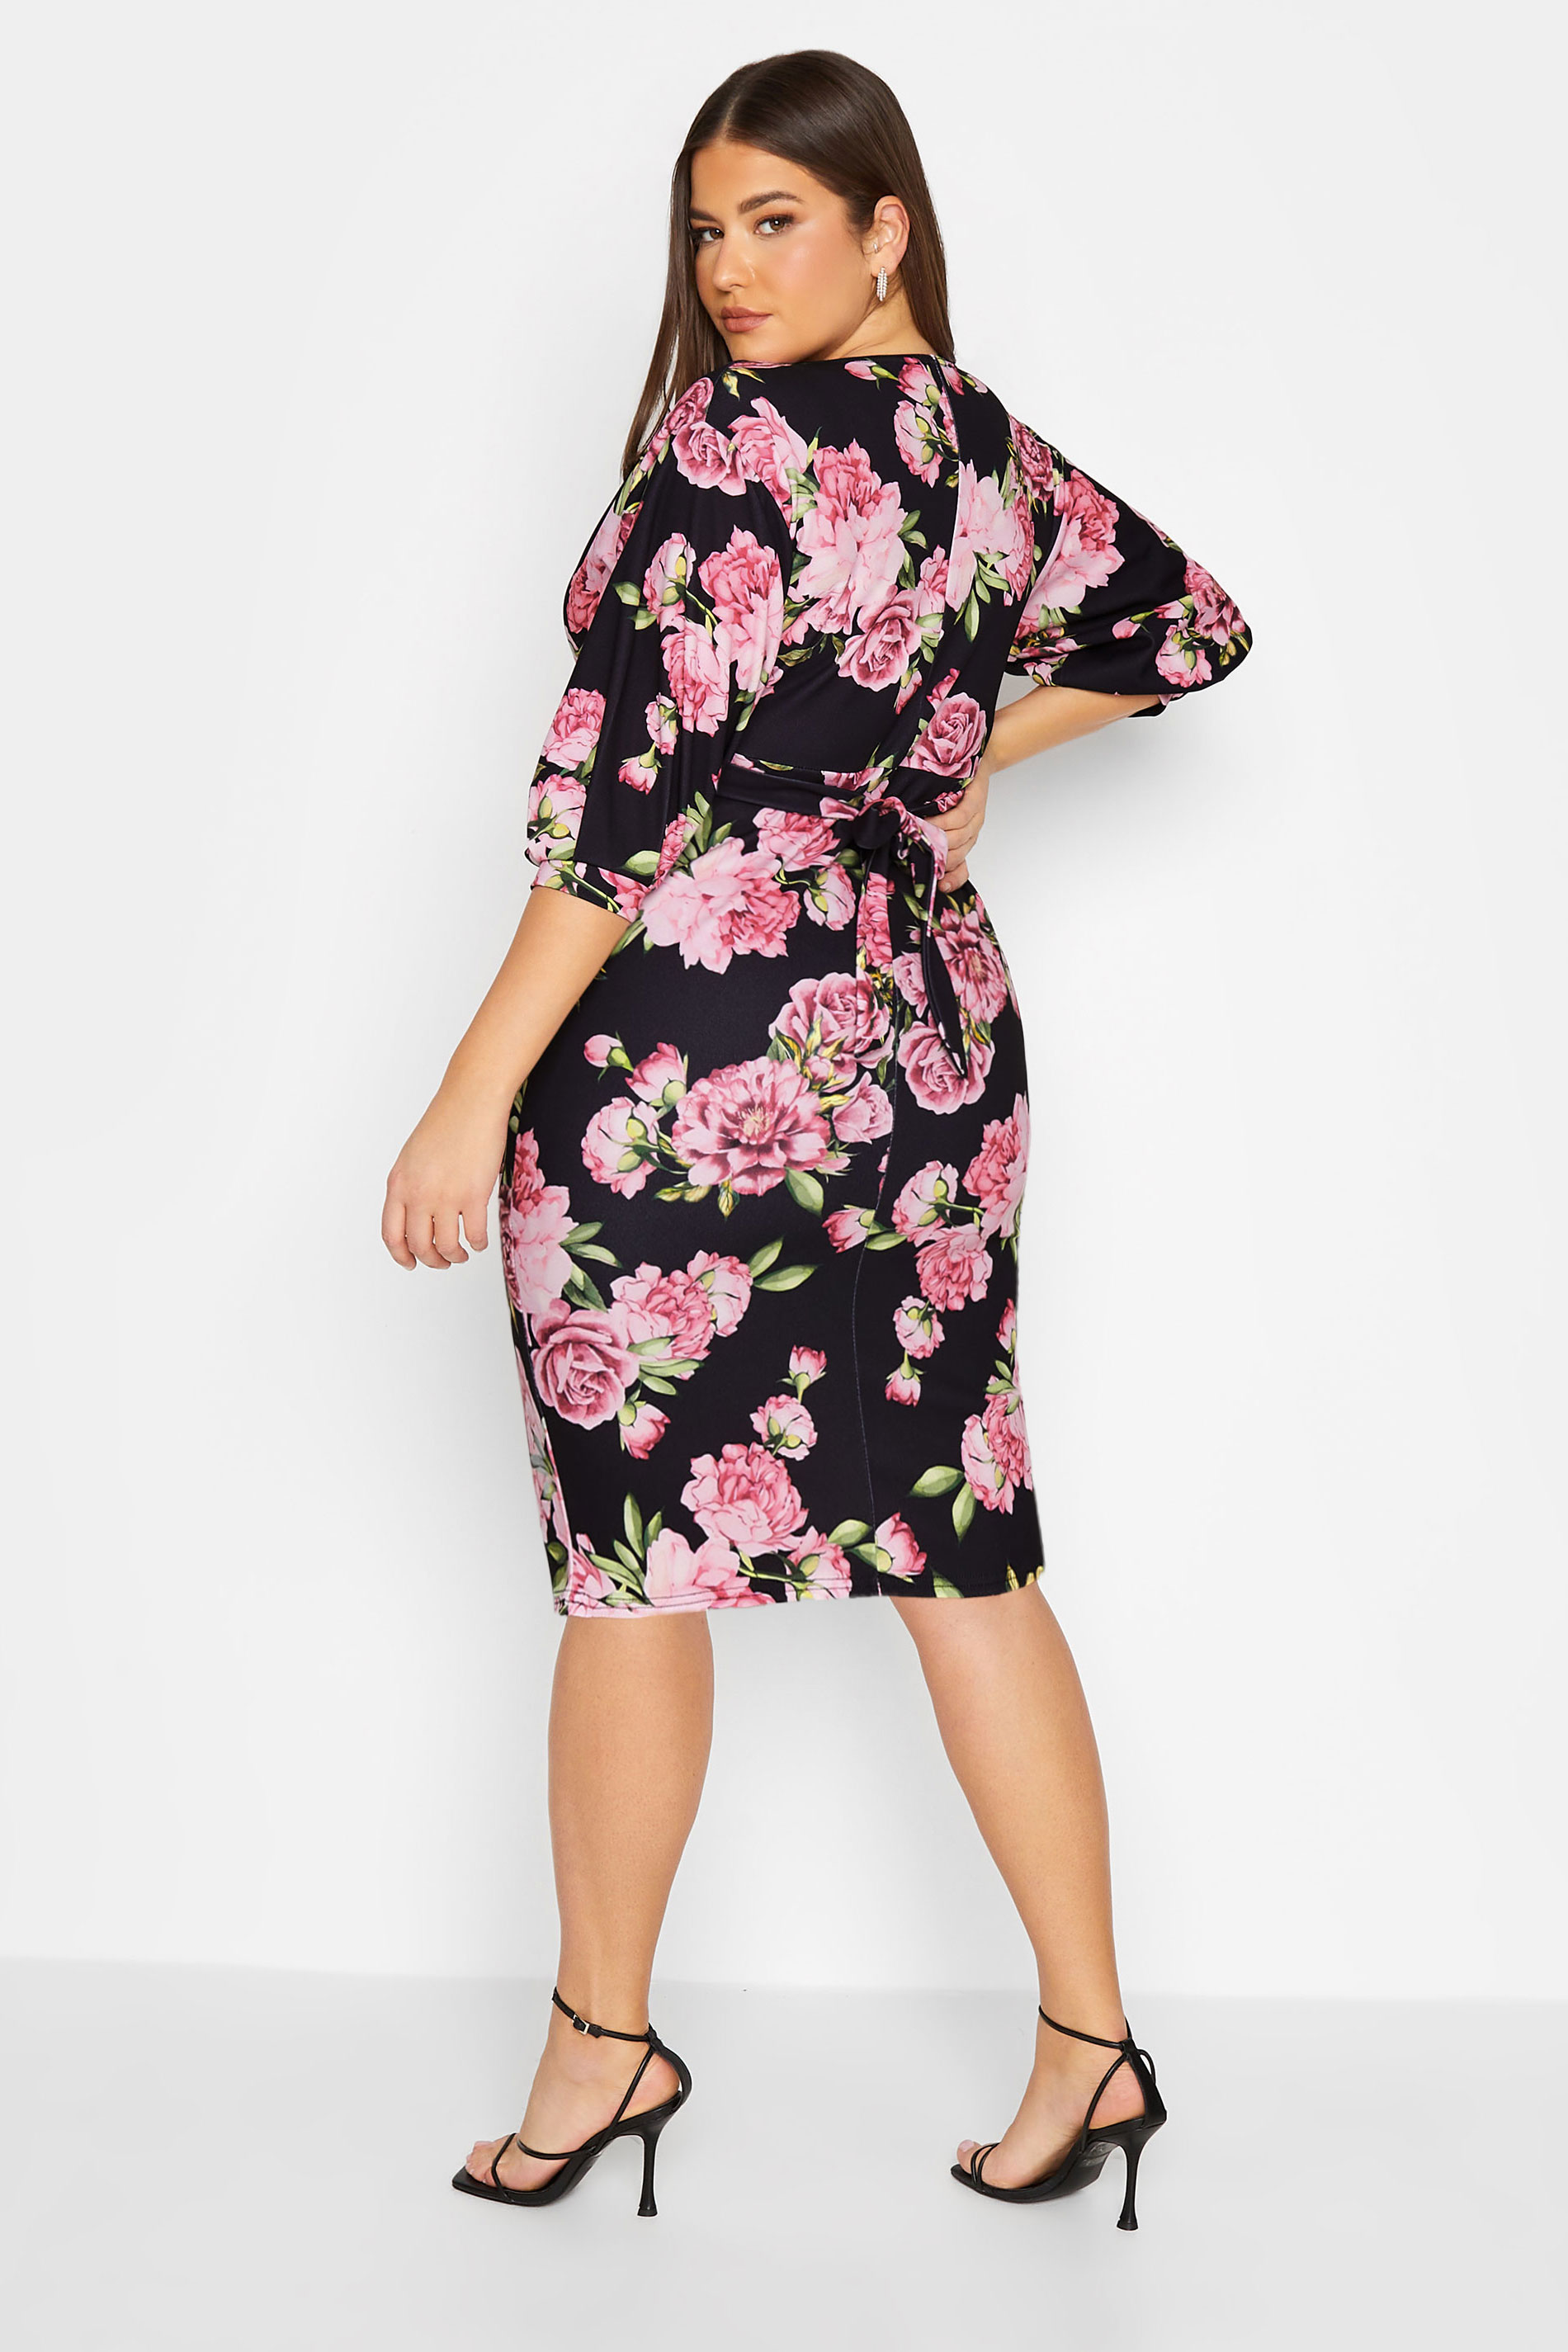 YOURS LONDON Plus Size Black Floral Wrap Dress | Yours Clothing 3